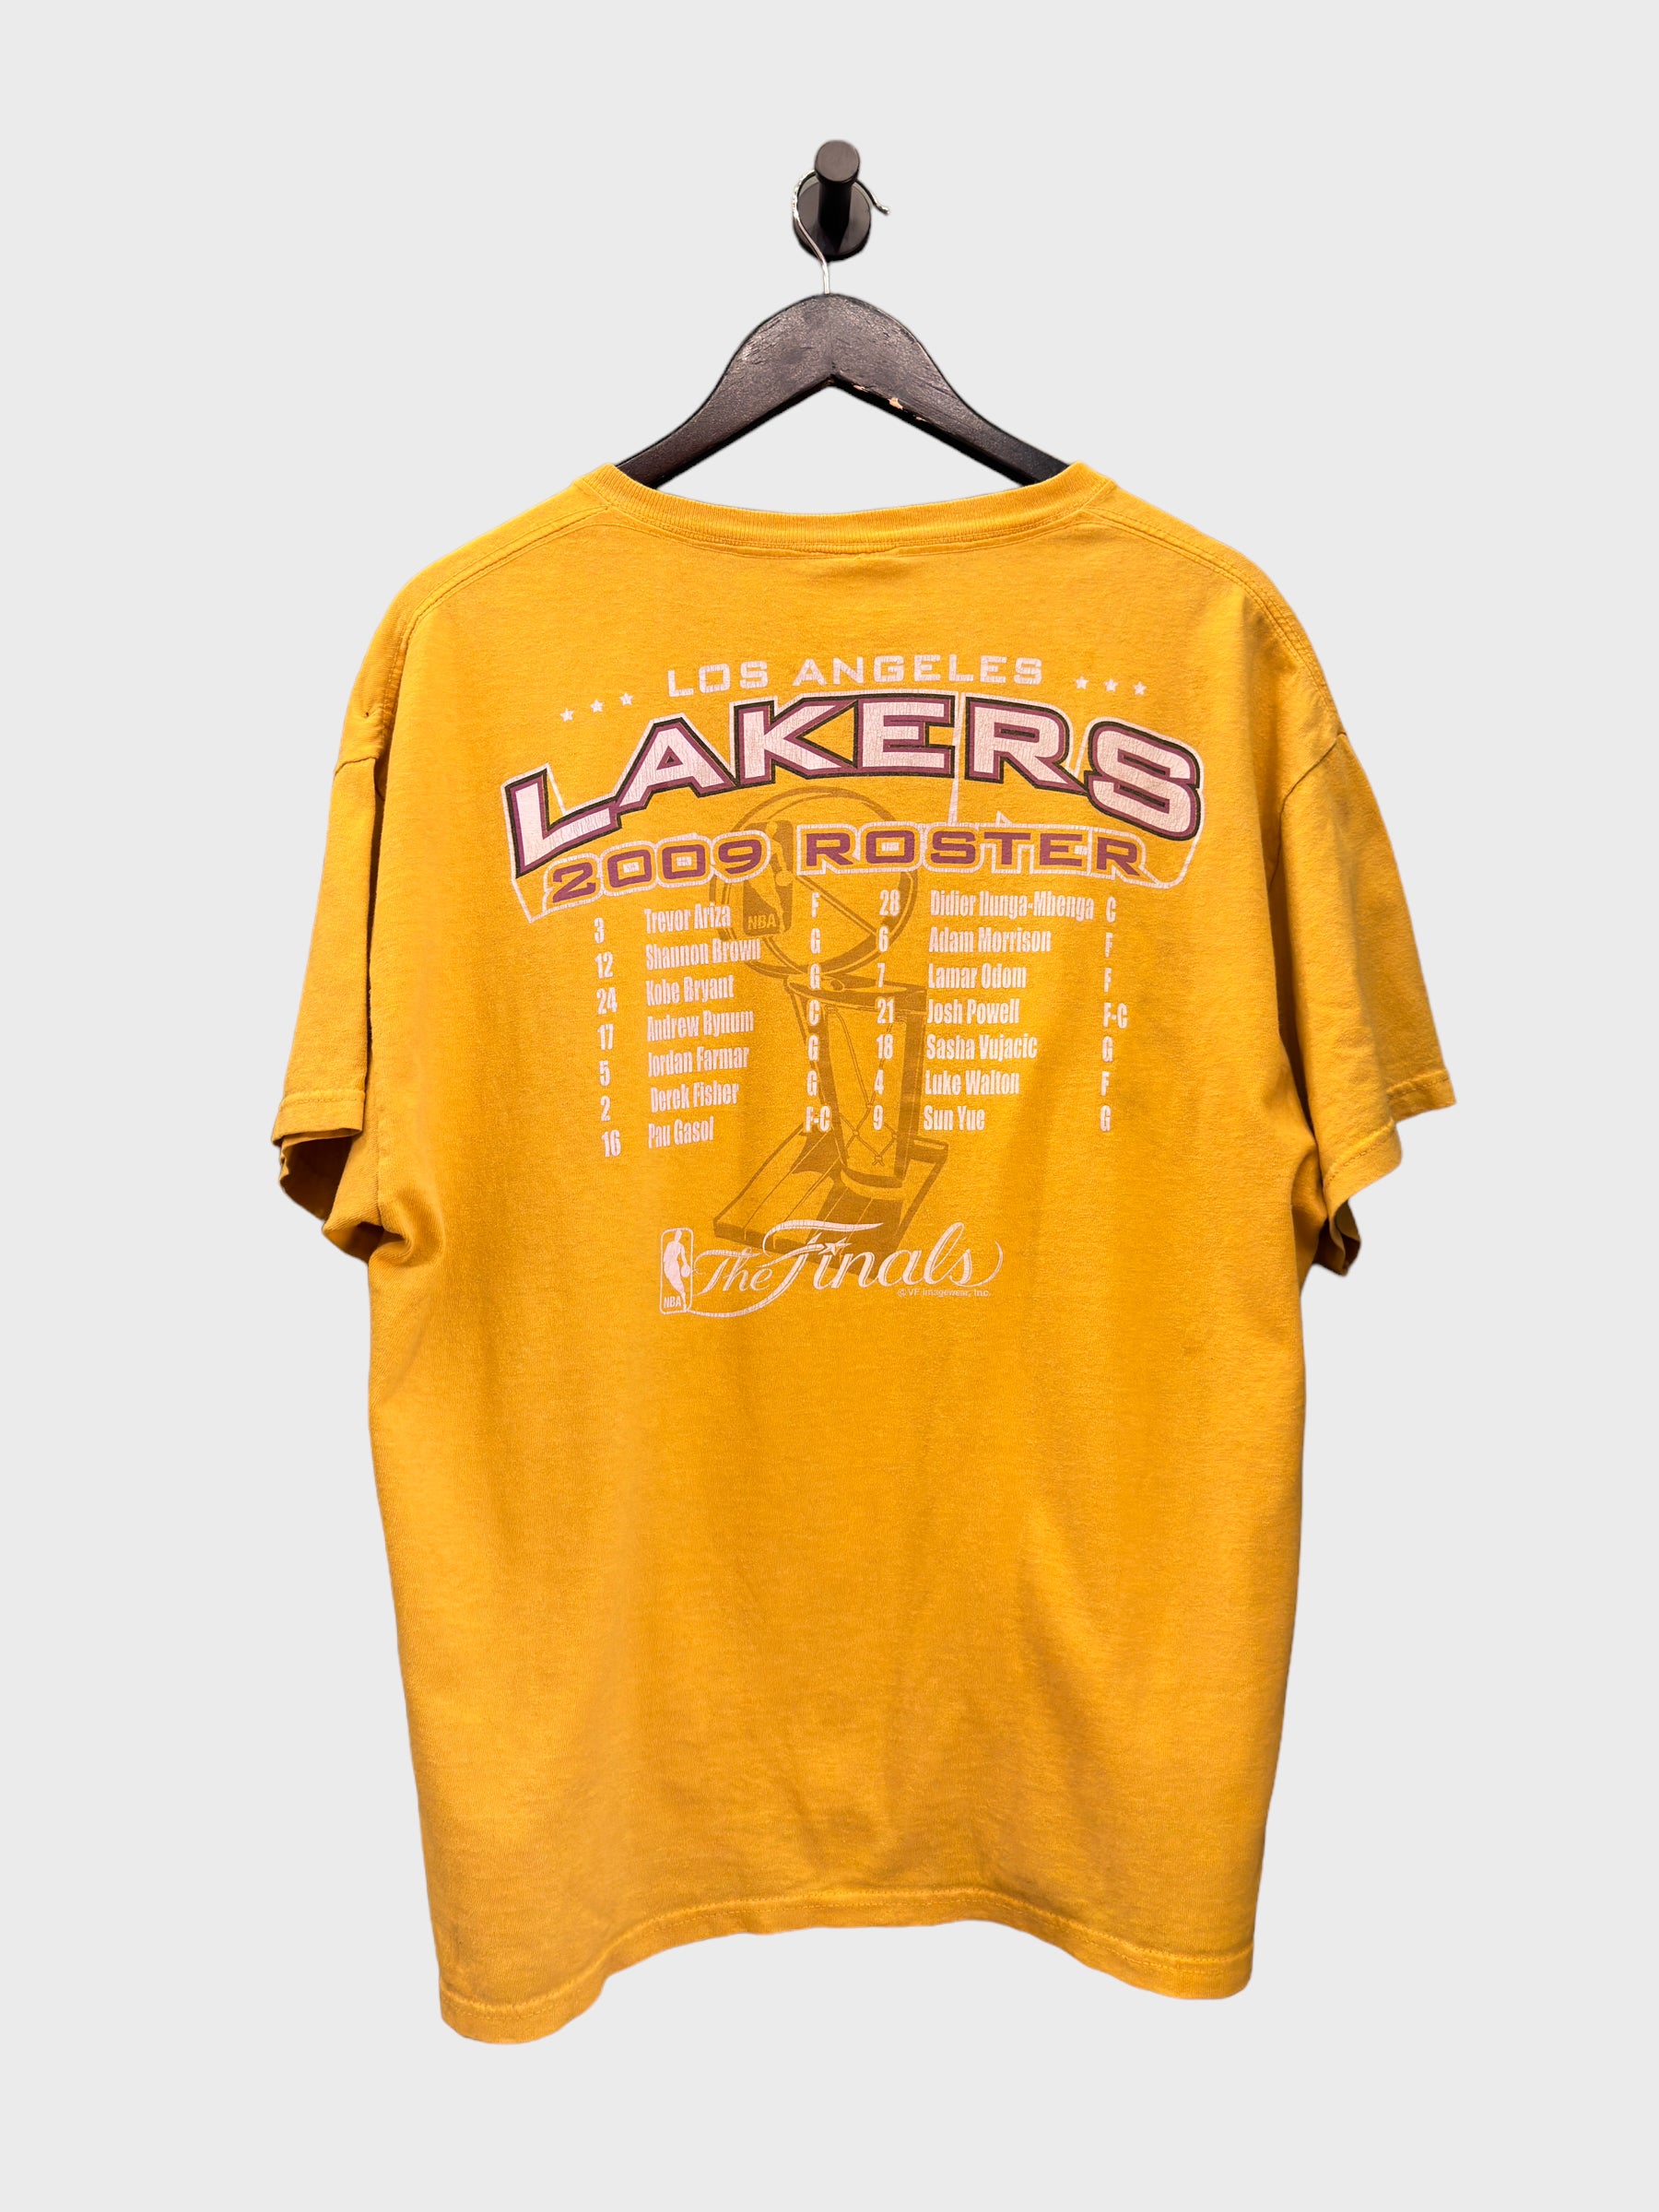 2009 Lakers Championship T-shirt